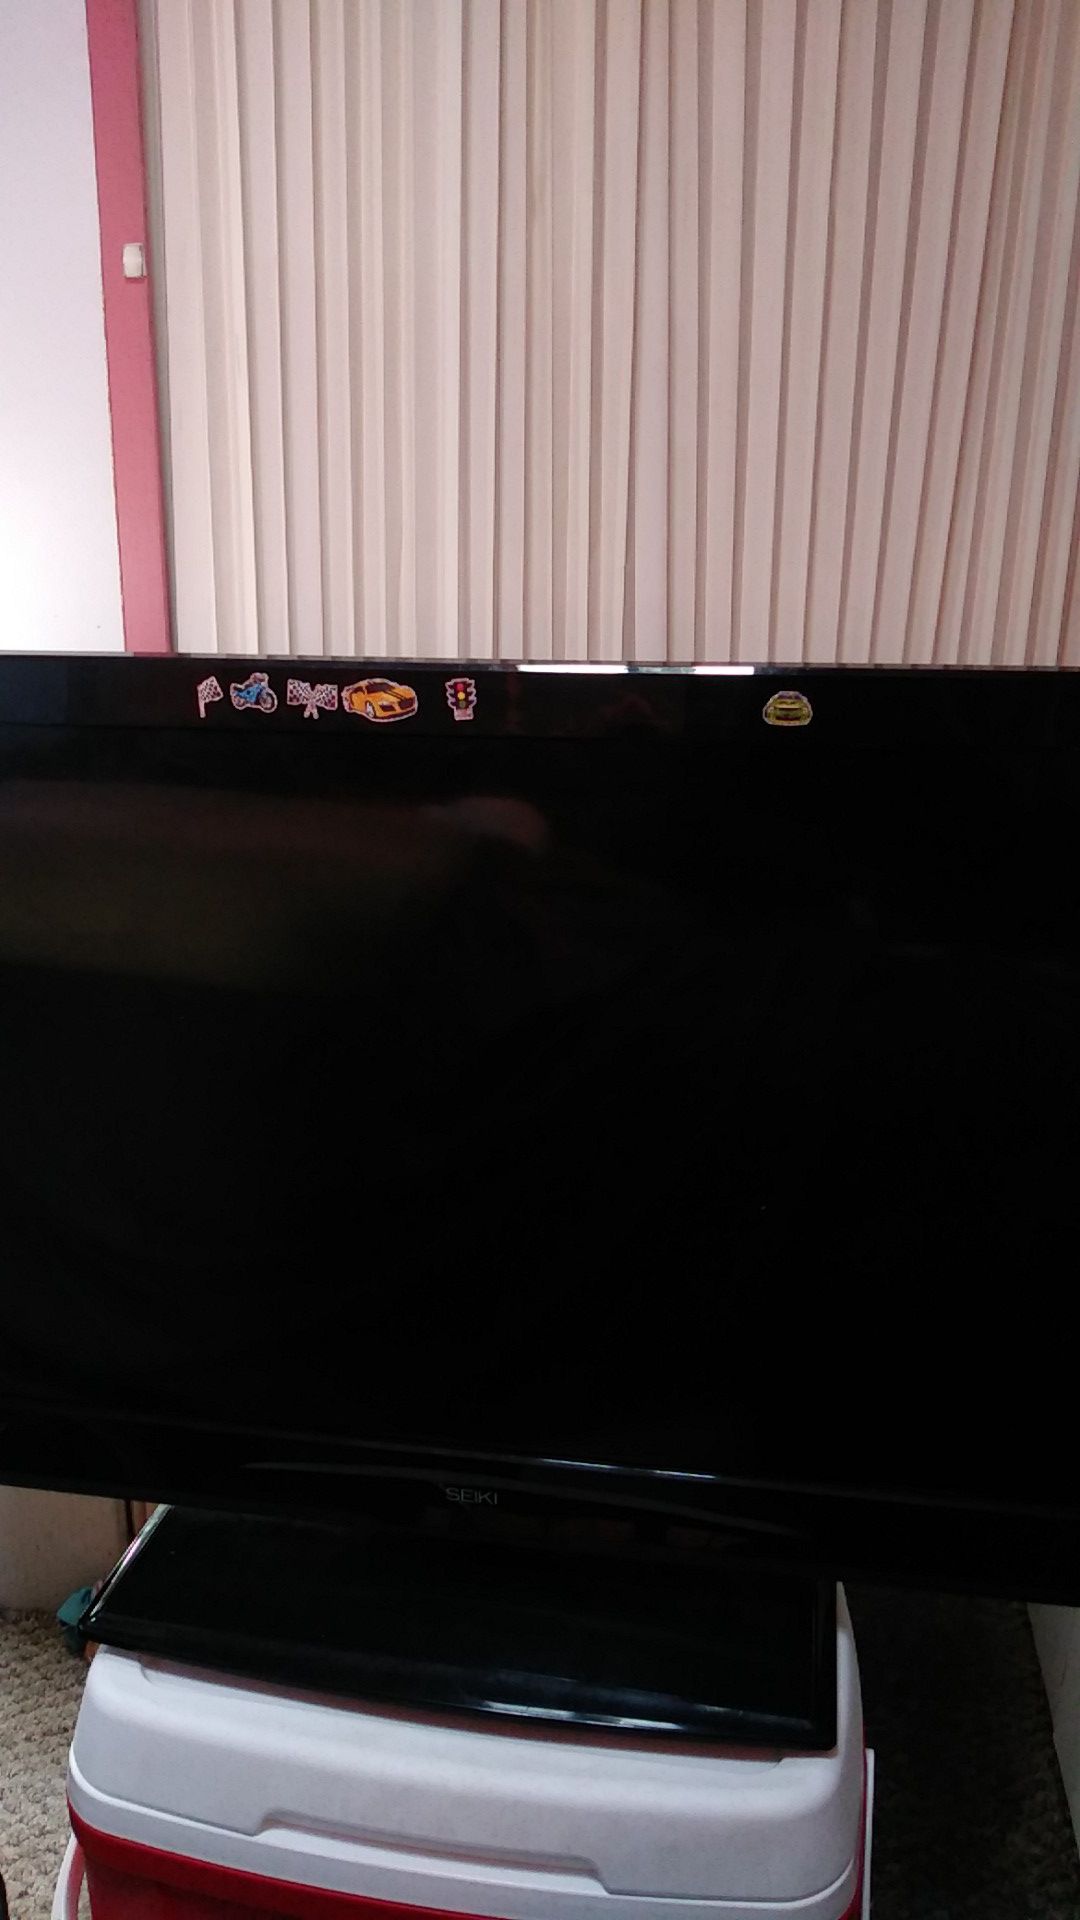 32 inch Flat screen TV.